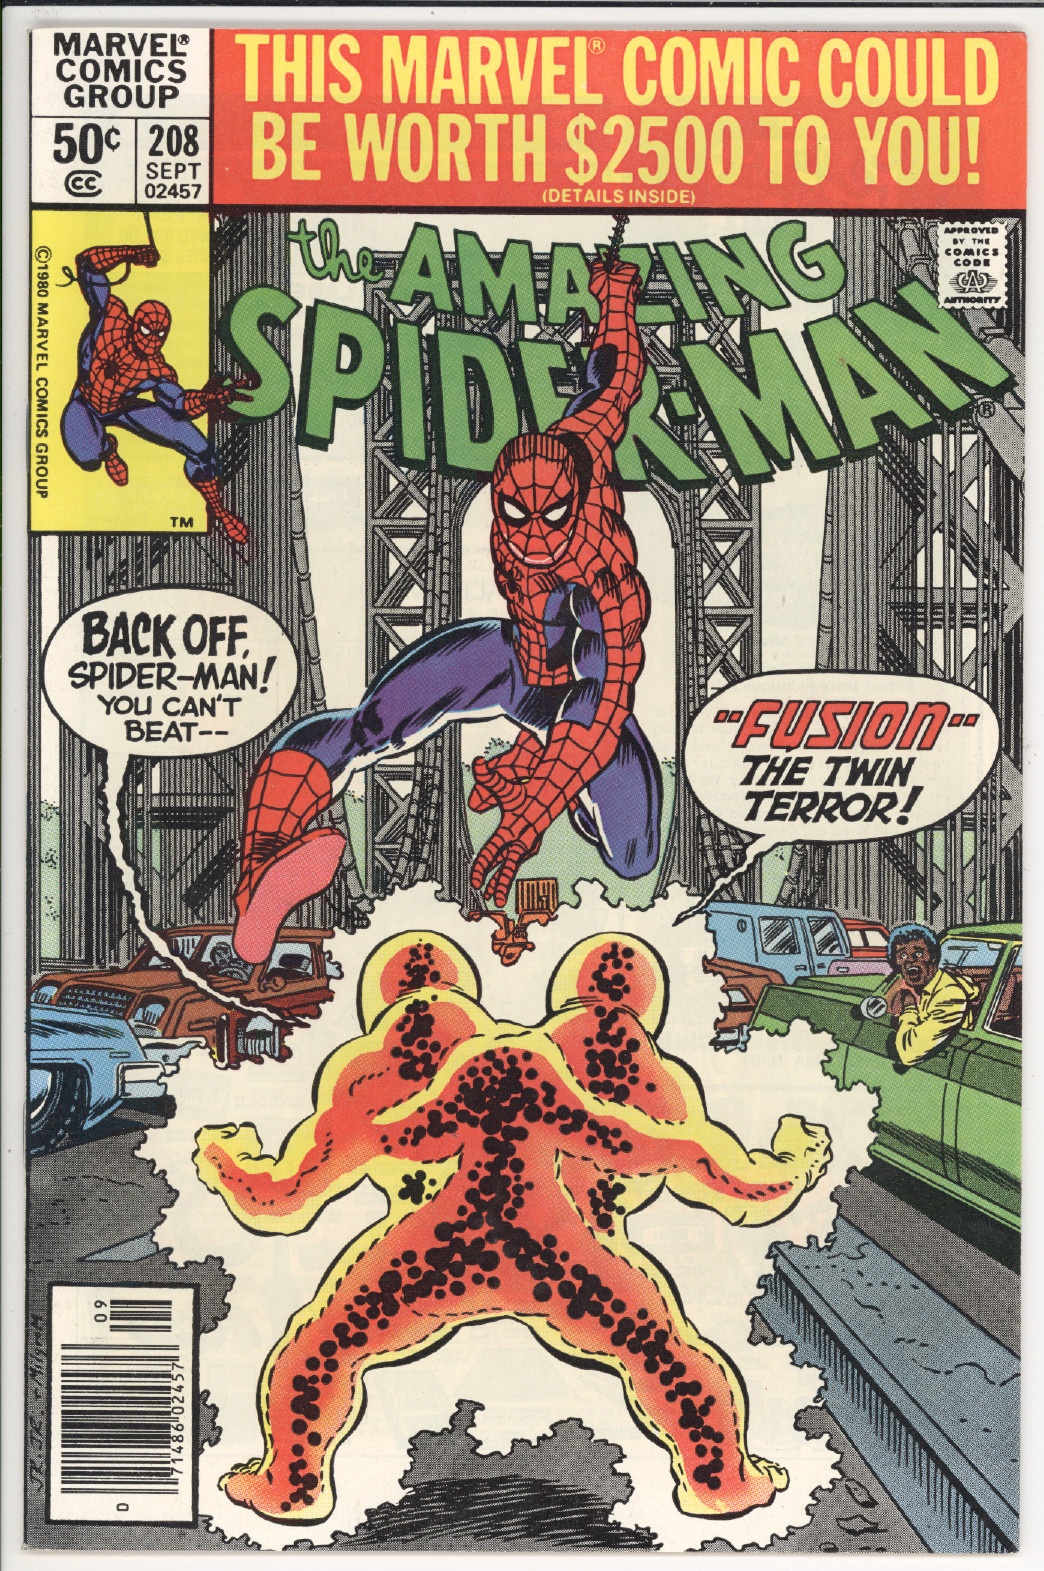 Amazing Spider-Man #208 front